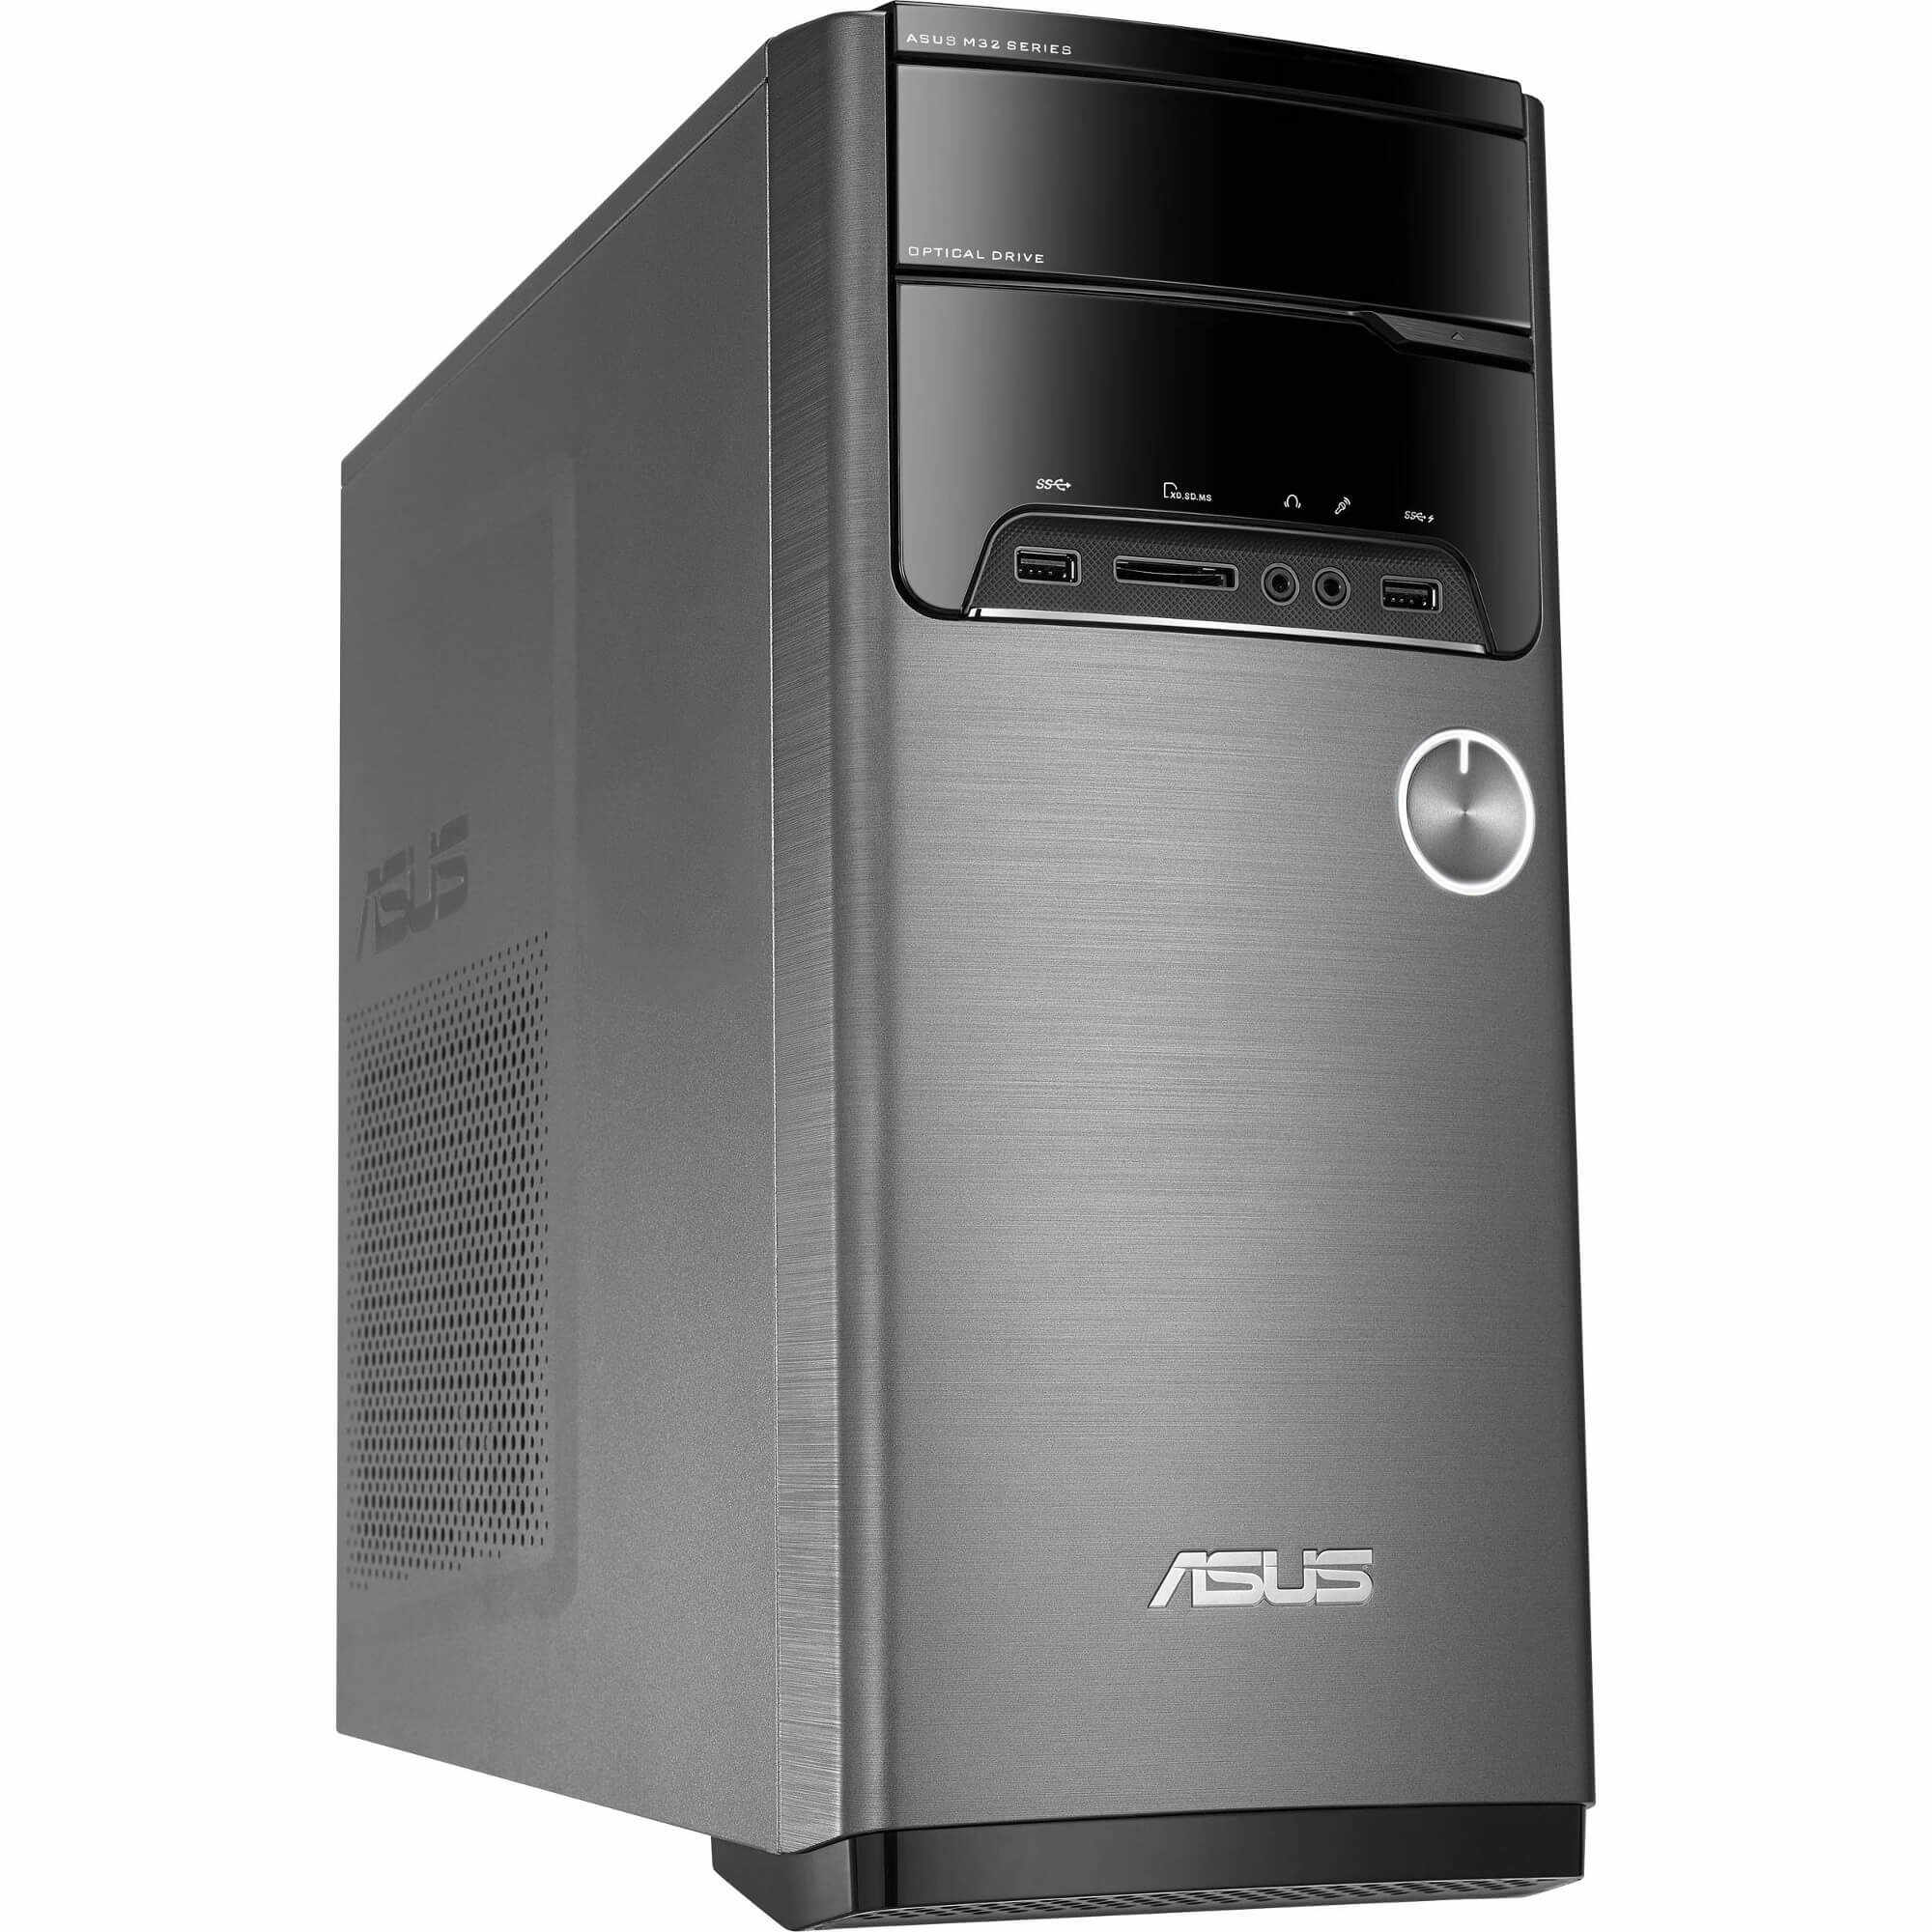 Sistem Desktop PC Asus M32CD, Intel Core i7-6700, 8GB DDR4, SSHD 1TB + 8GB, nVidia GeForce GTX 950M 2GB, Free DOS